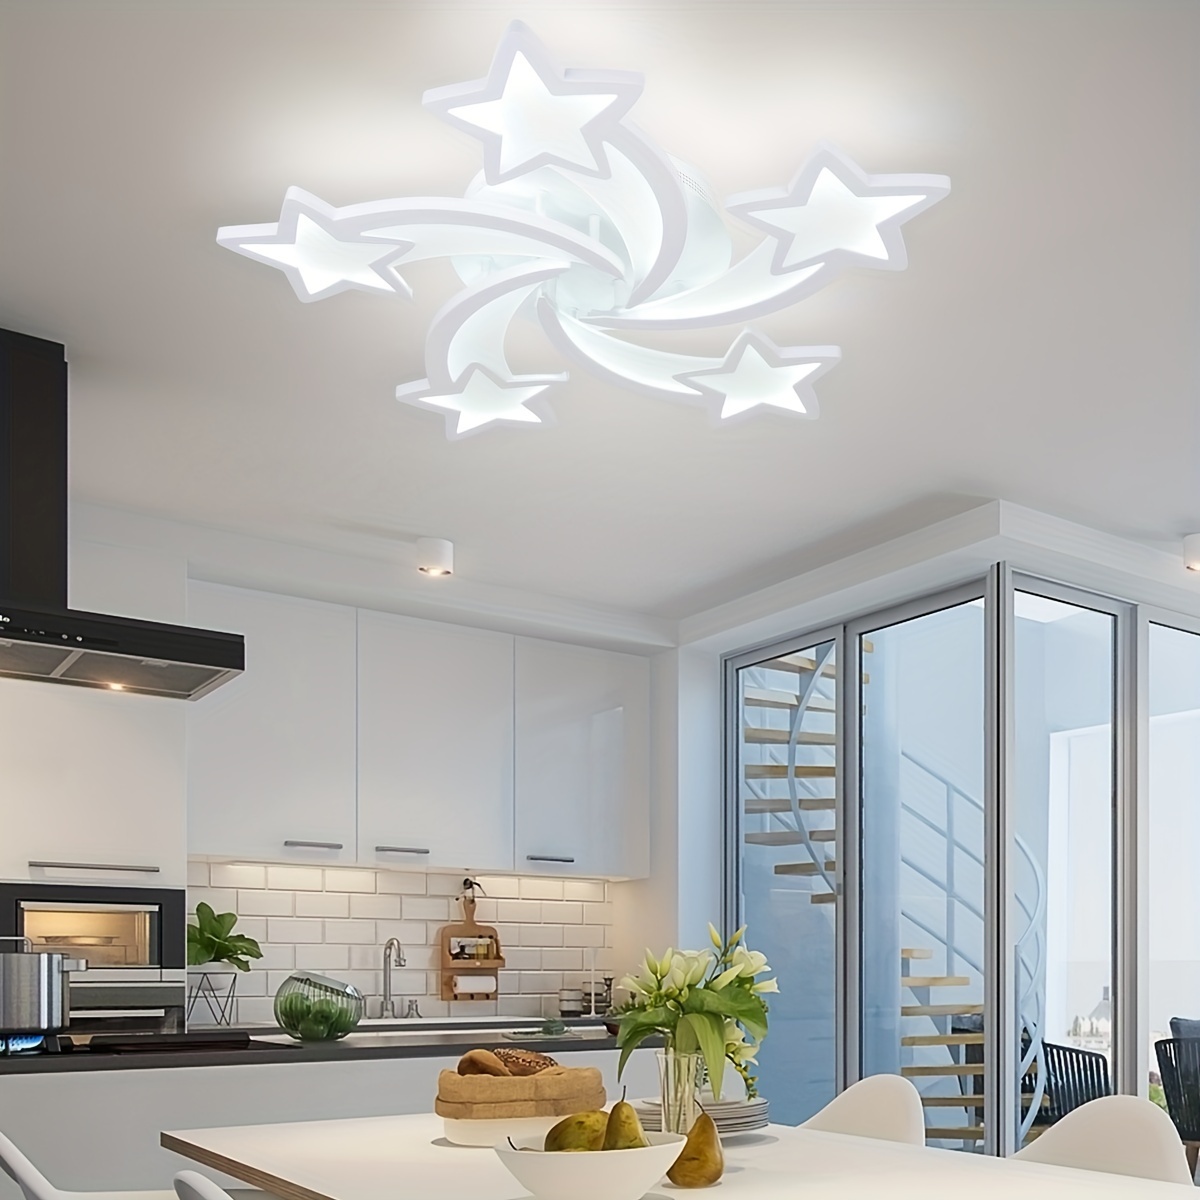 

Creative Led Ceiling Light, Flush Mount Lighting Fixtures With Star Shape, 60w Modern Ceiling Lamp Non Dimmable For Living Room Bedroom Kids Room, White/6000k